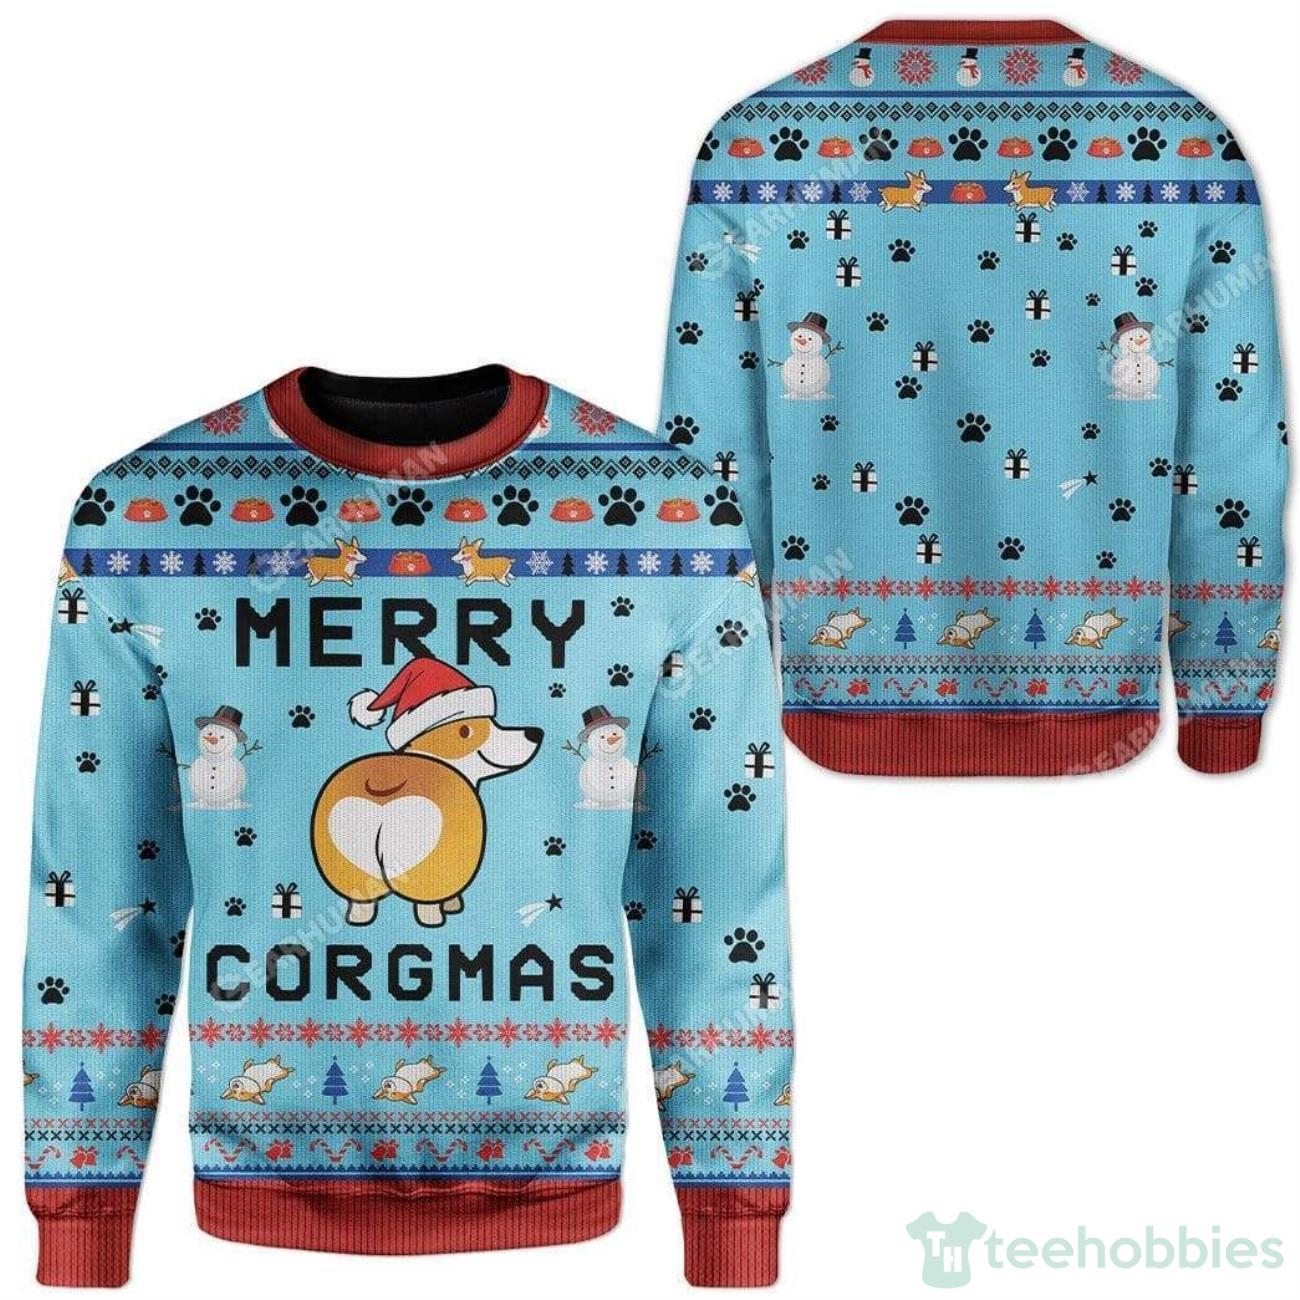 Corgi Dog Ugly Sweater For Christmas Product Photo 1